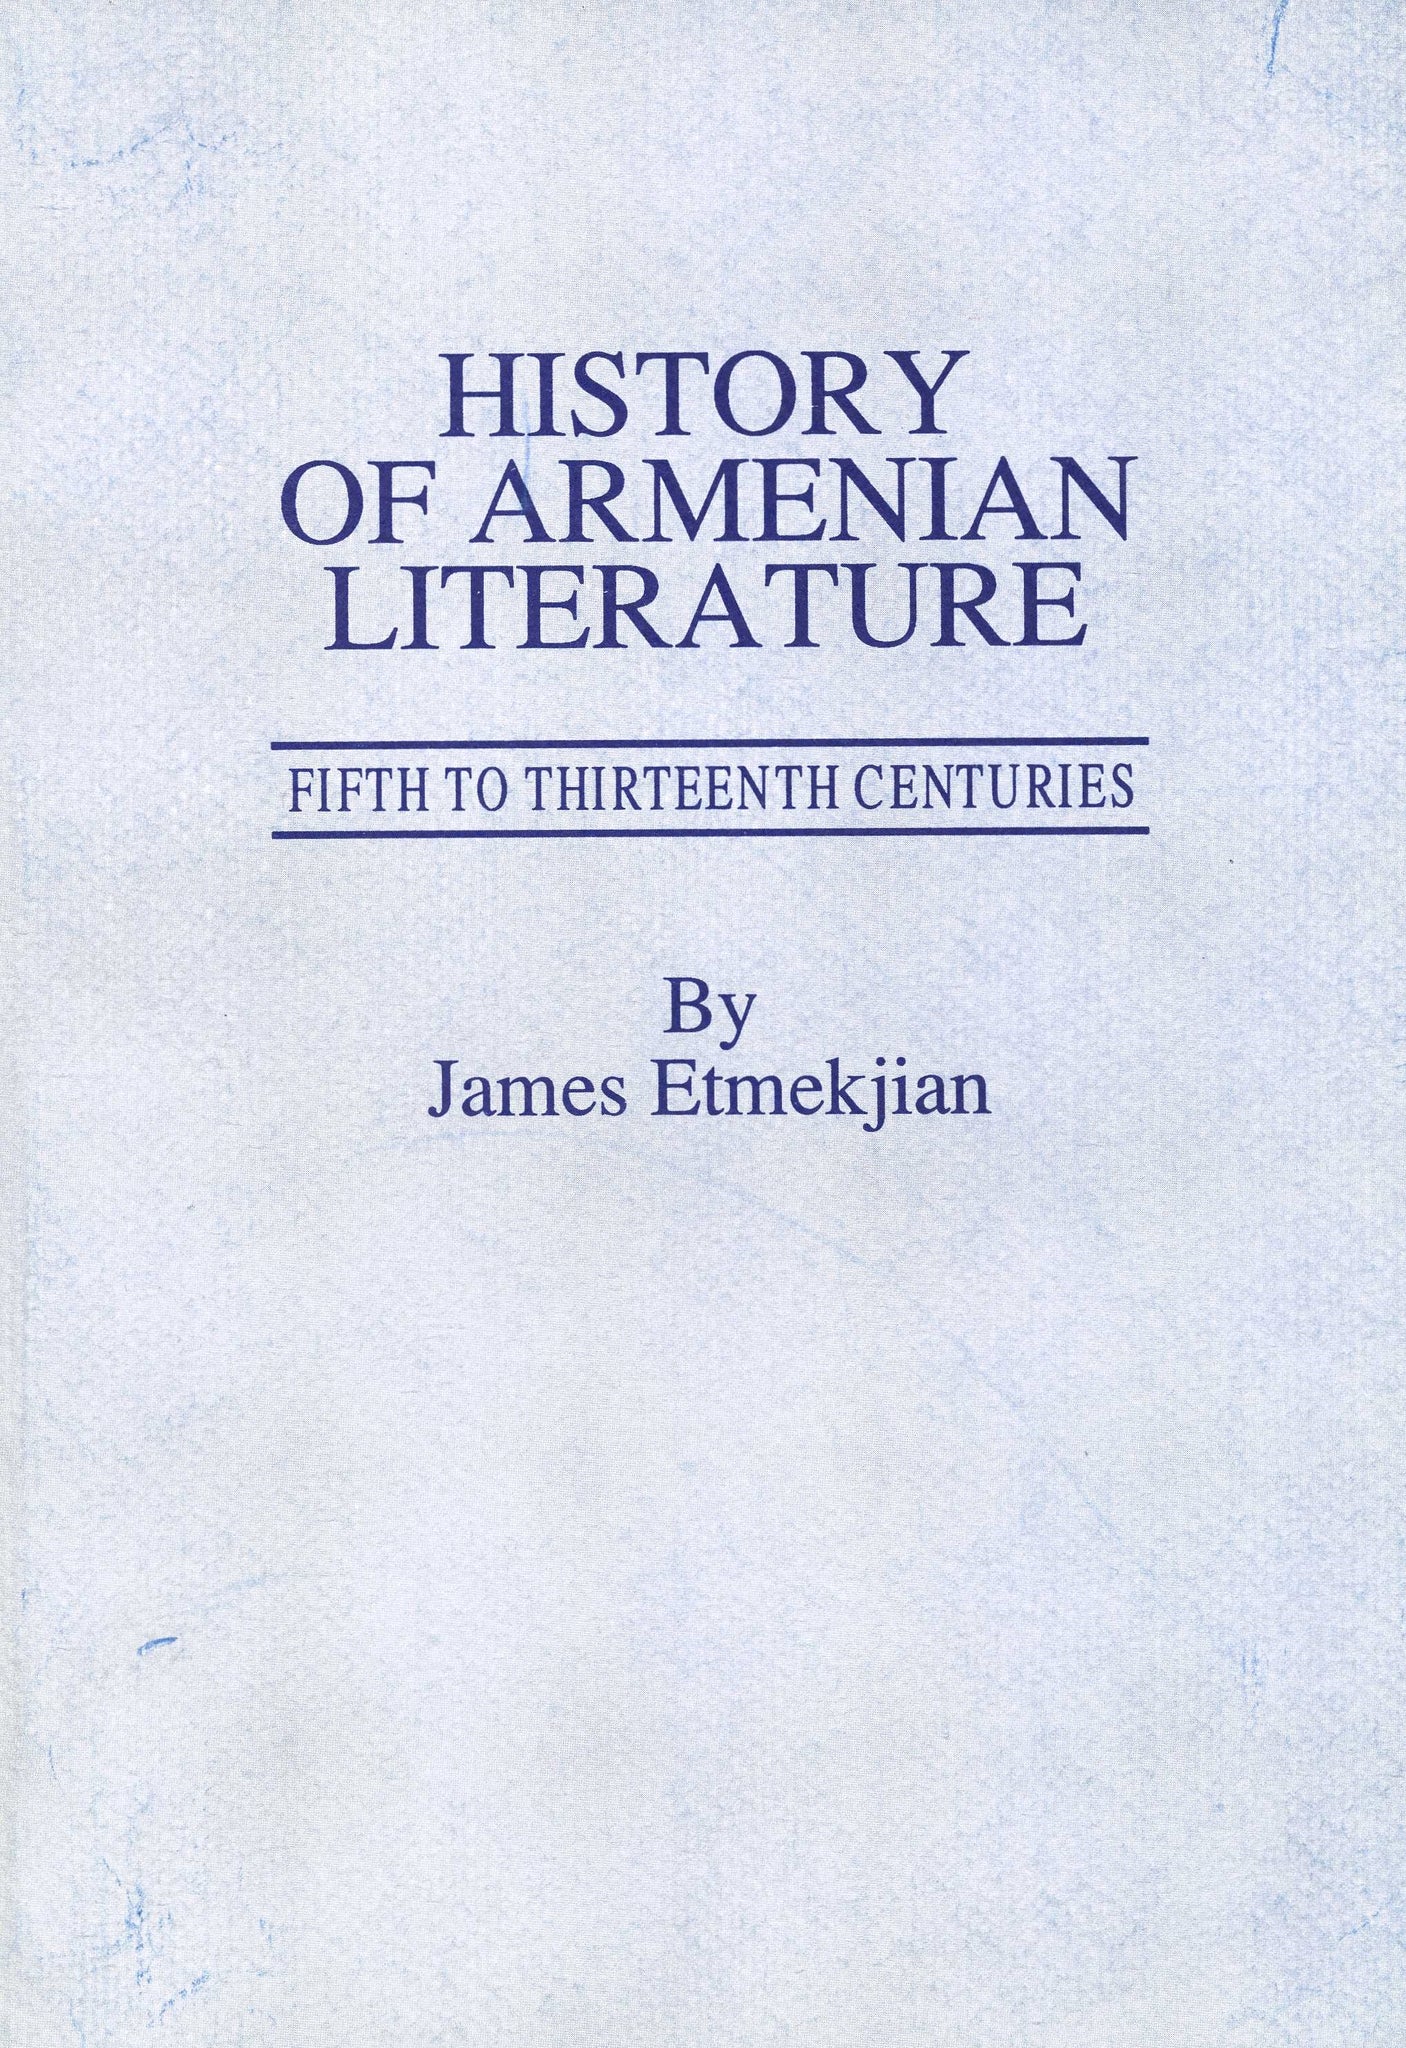 HISTORY OF ARMENIAN LITERATURE: Fifth to Thirteenth Centuries